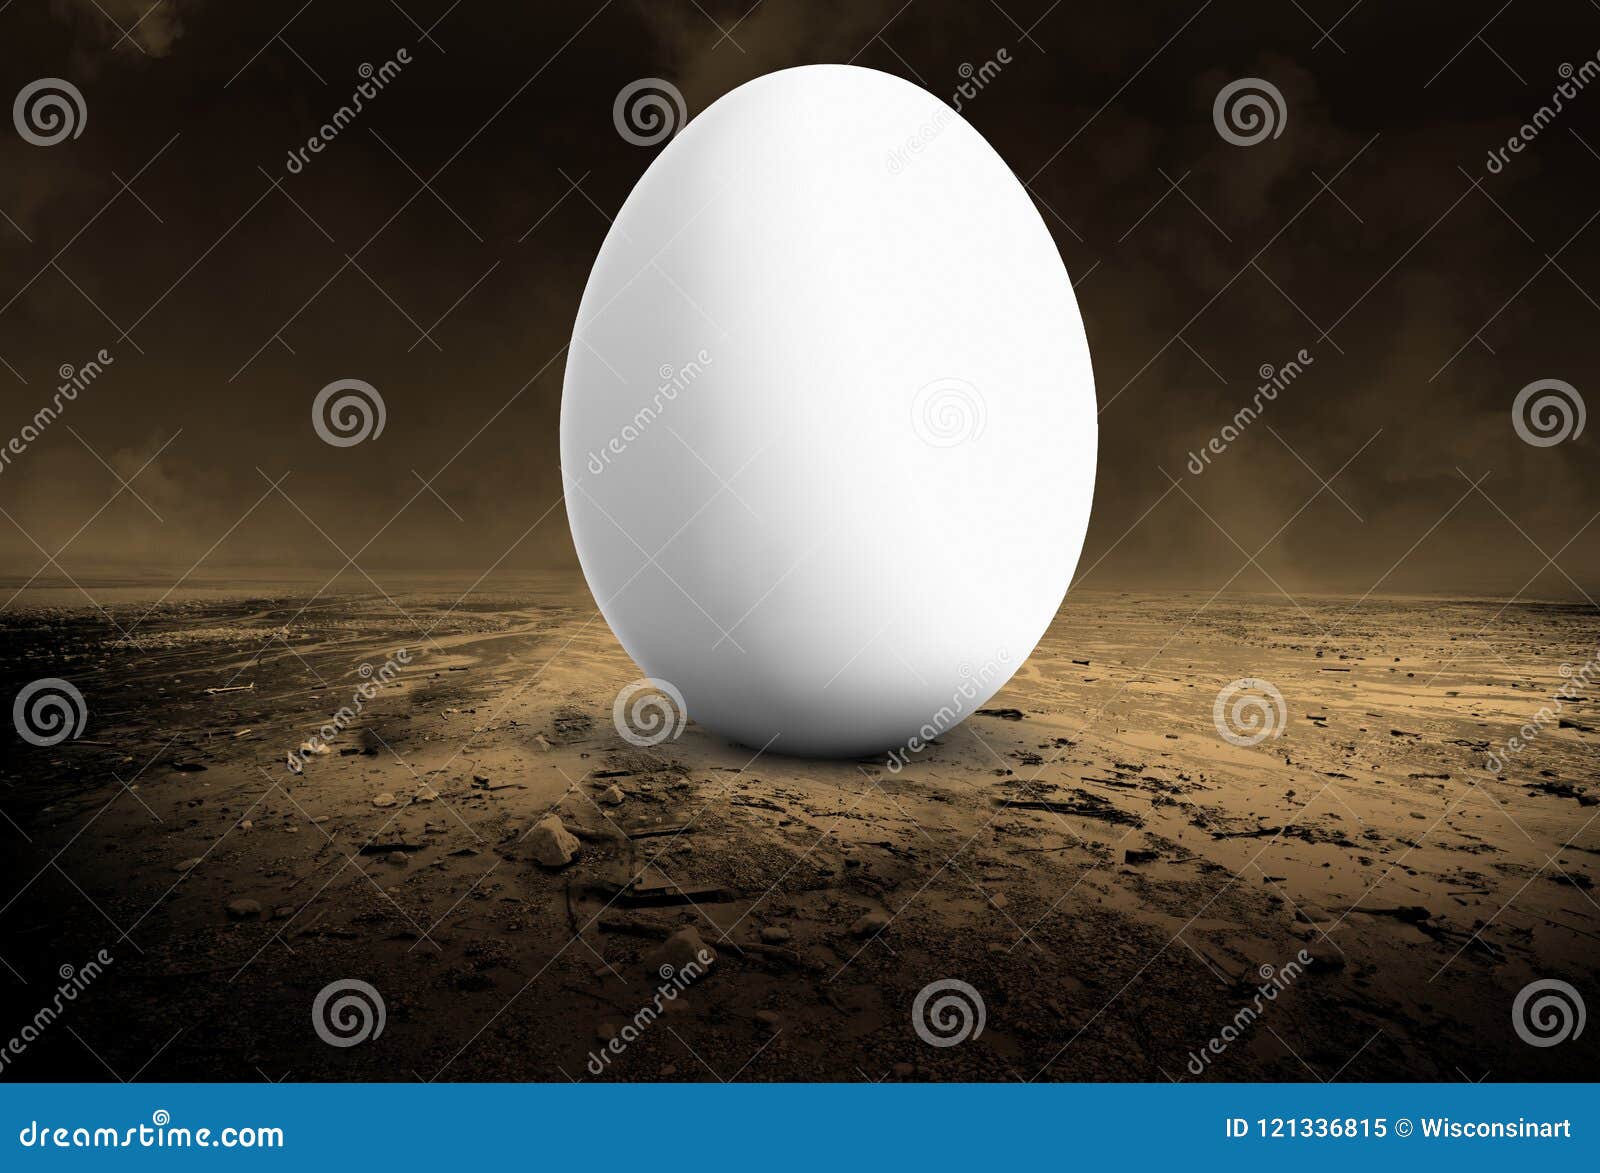 surreal chicken egg, desolate desert